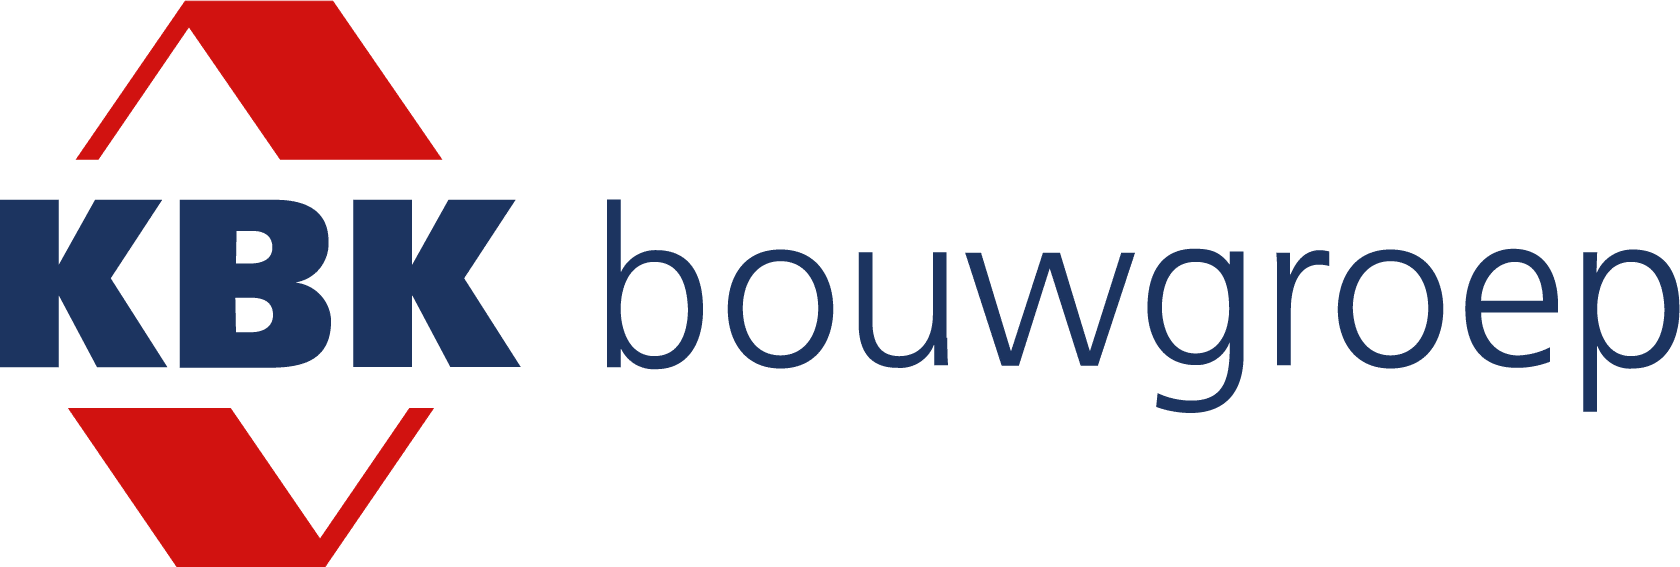 KBK Bouwgroep logo